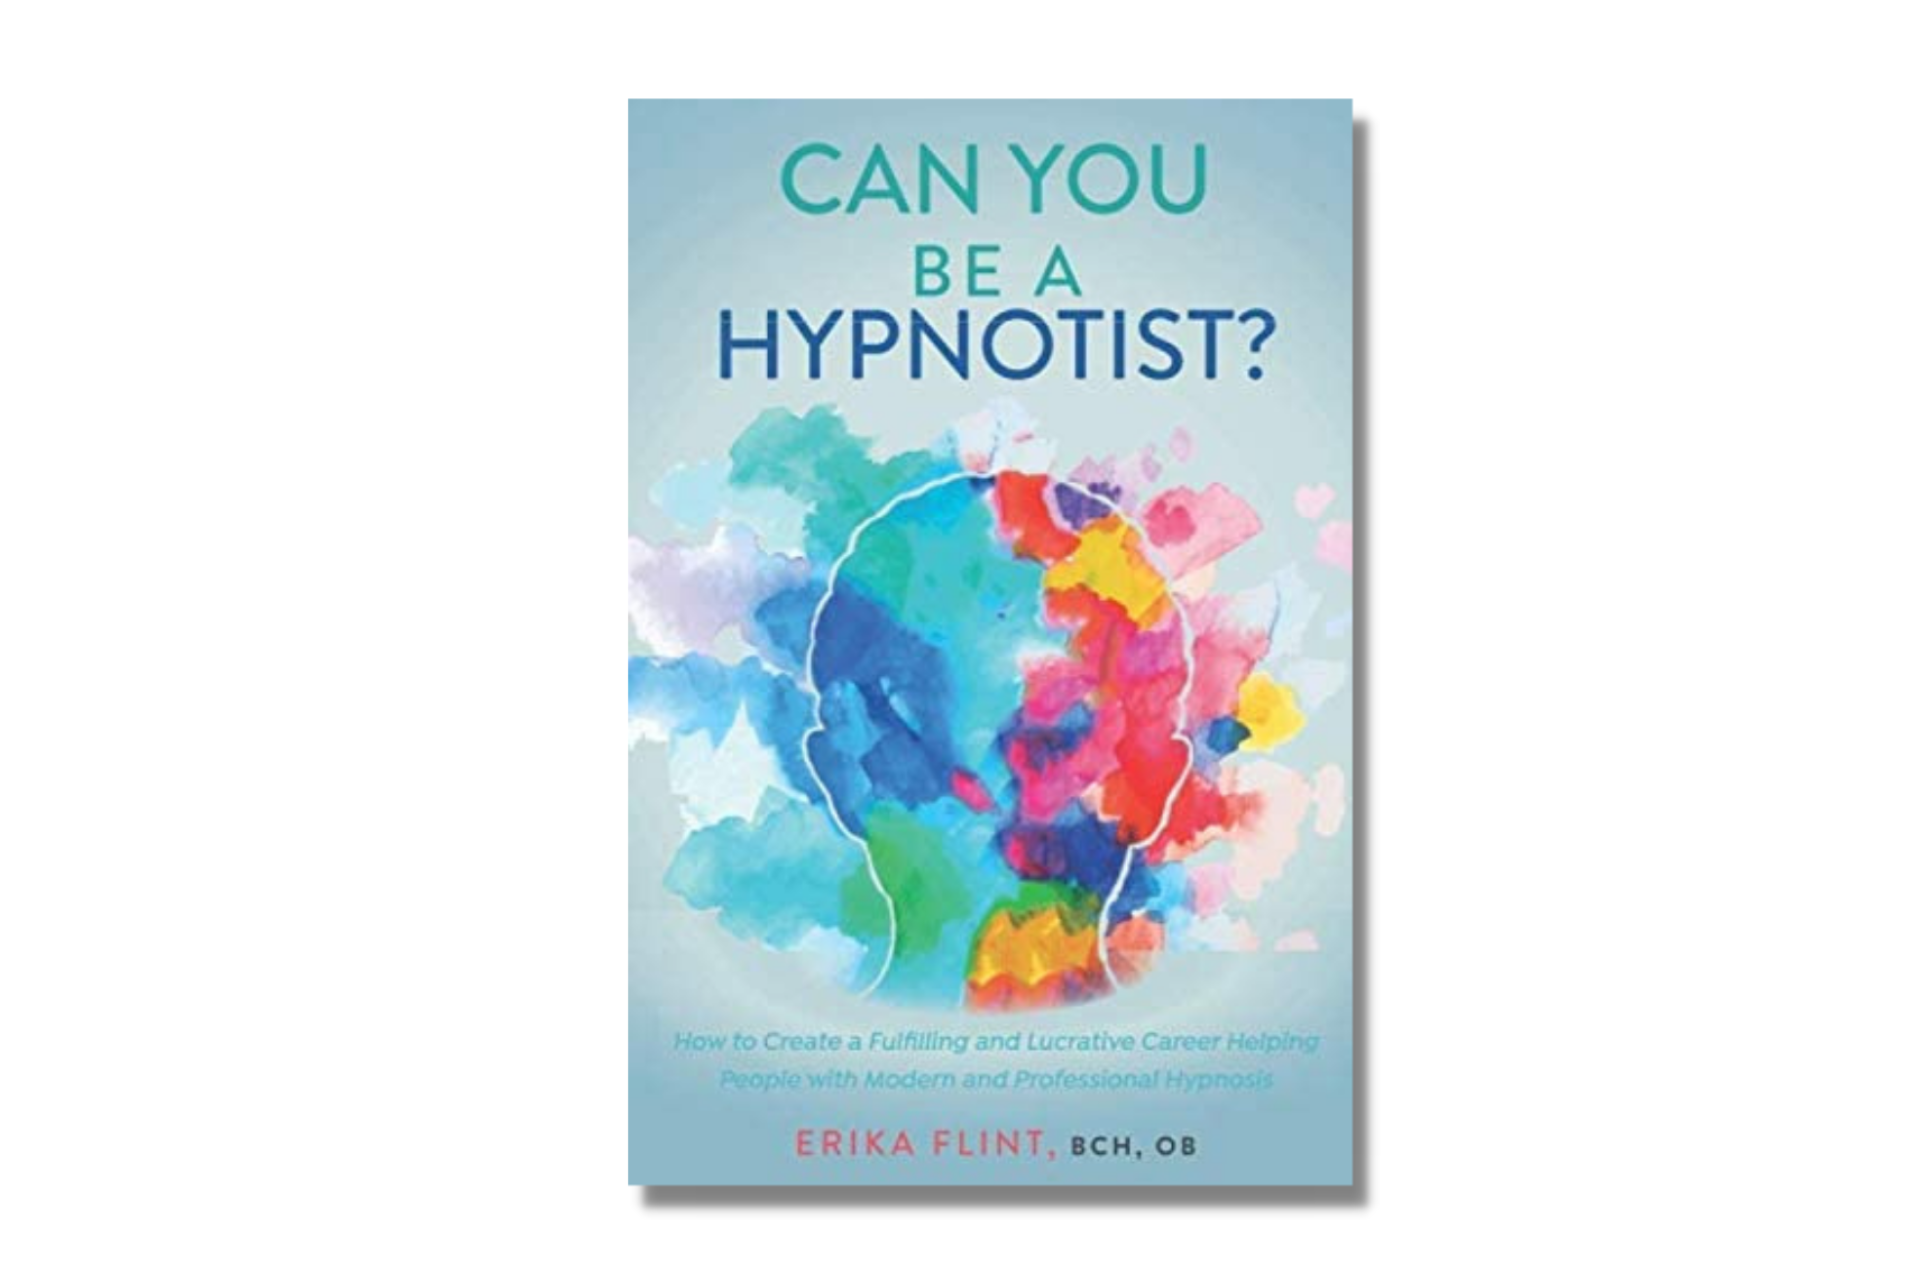 Can You Be a Hypnotist by Erika Flint